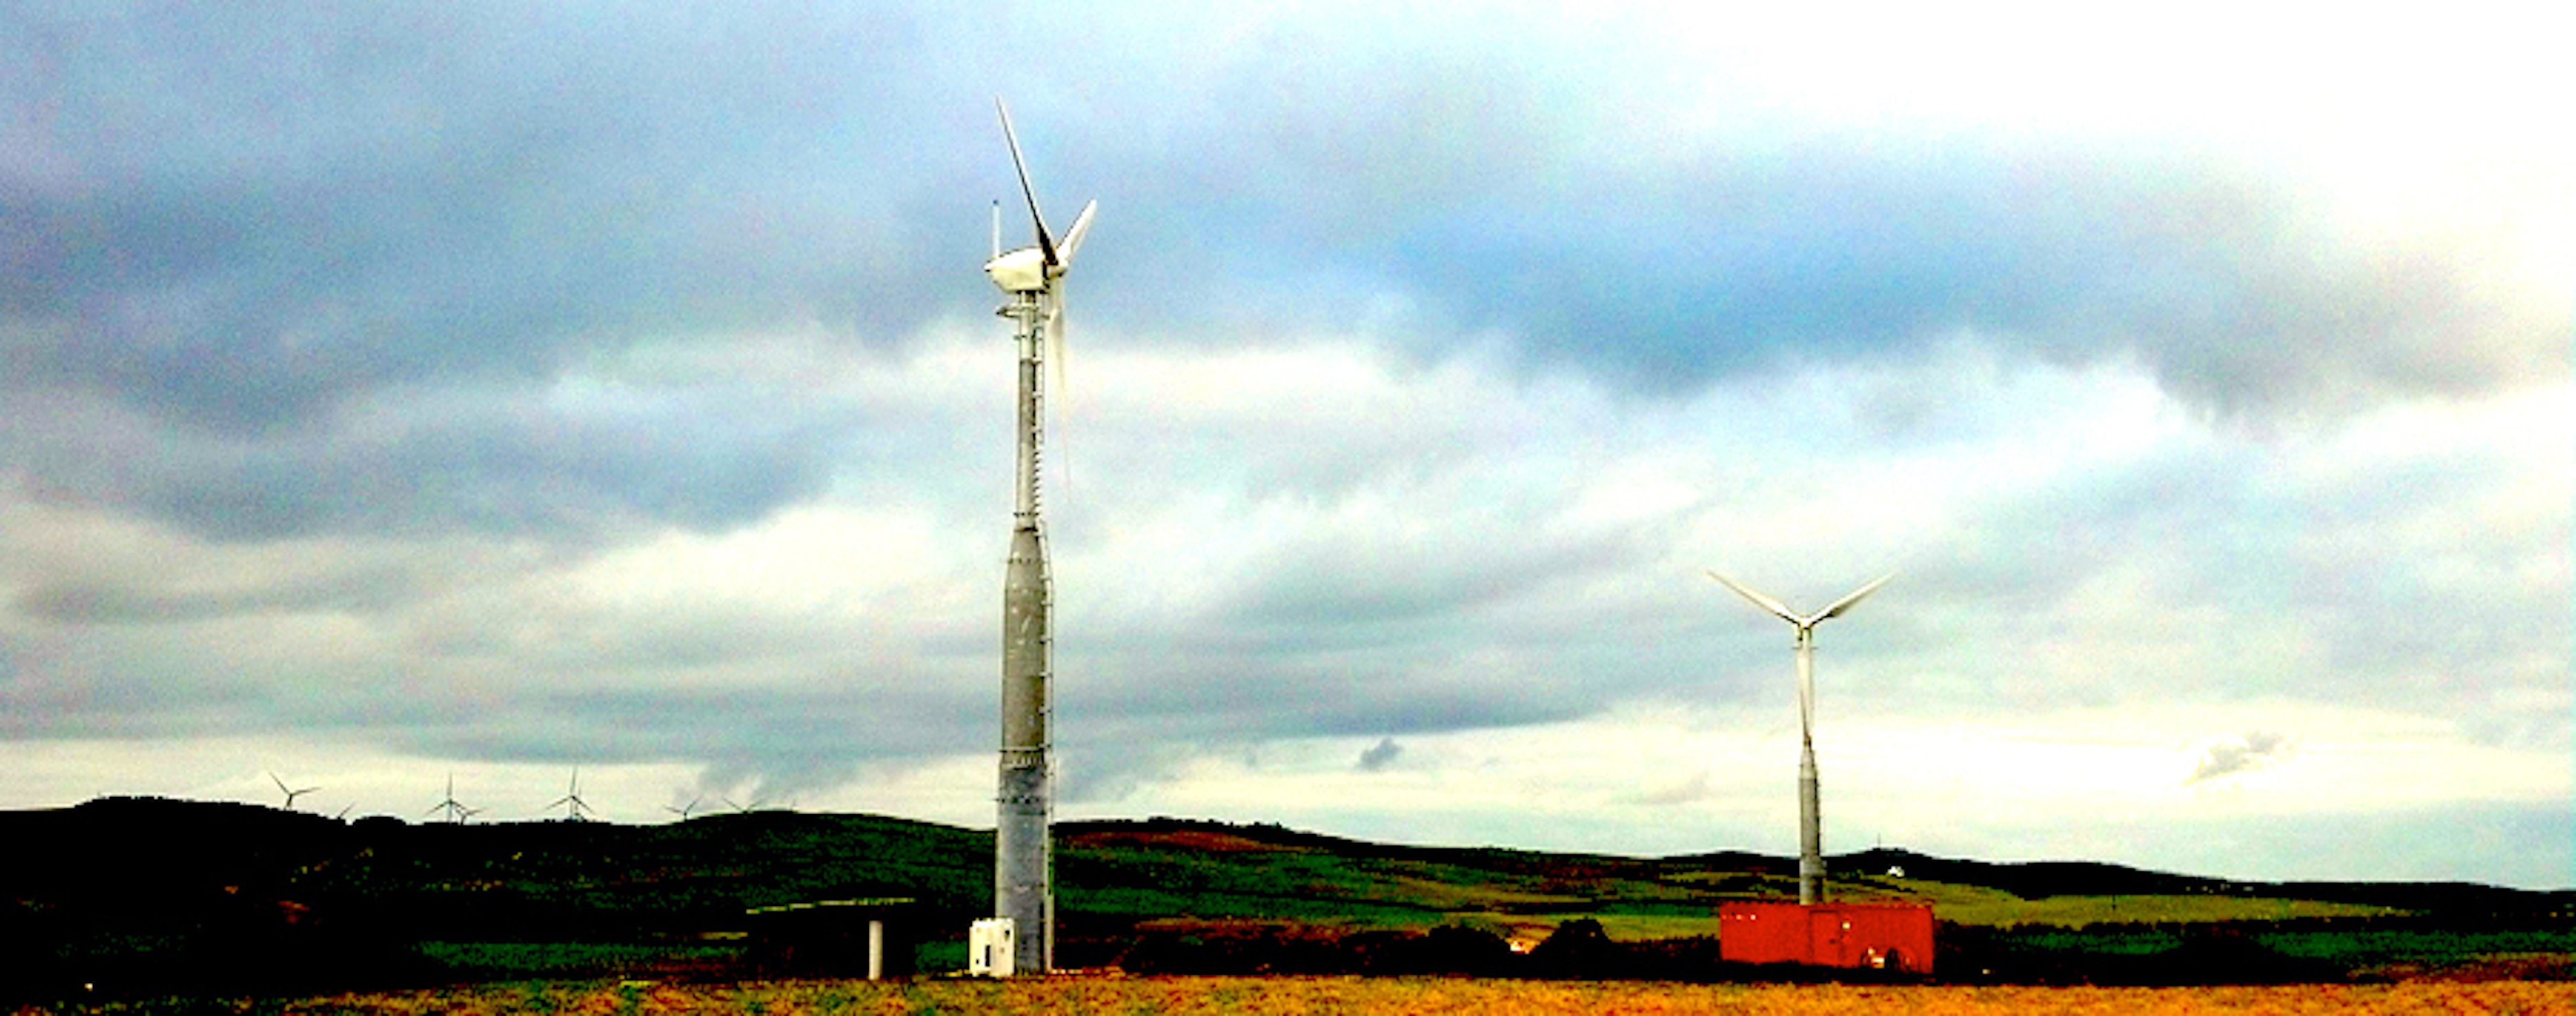 Argosy Wind Turbines Hard at Work in the UK